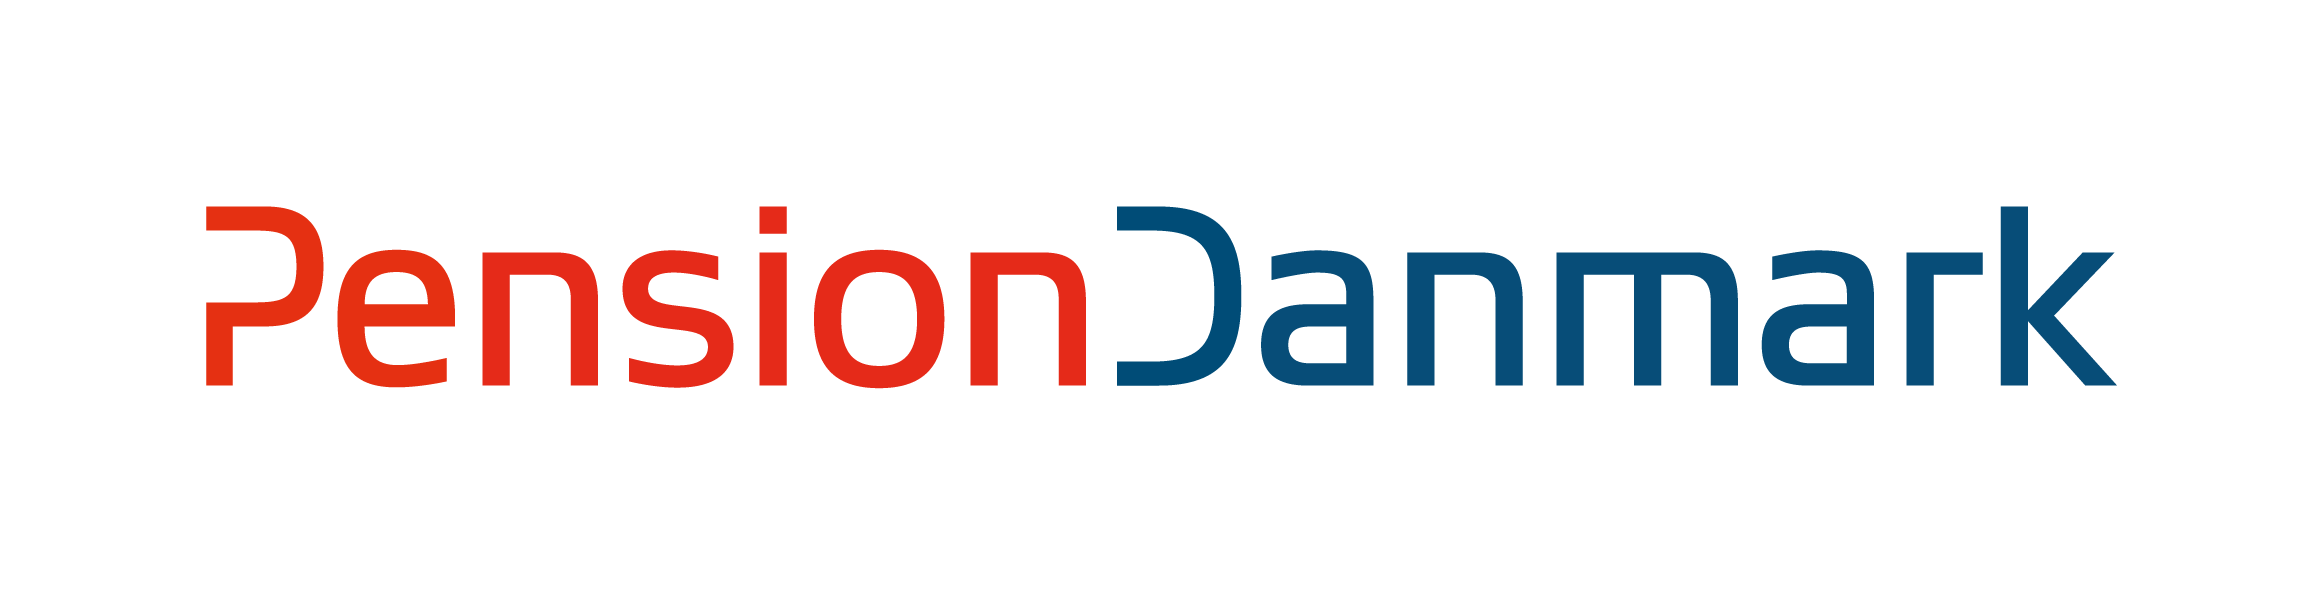 pensiondanmark-logo-png.png